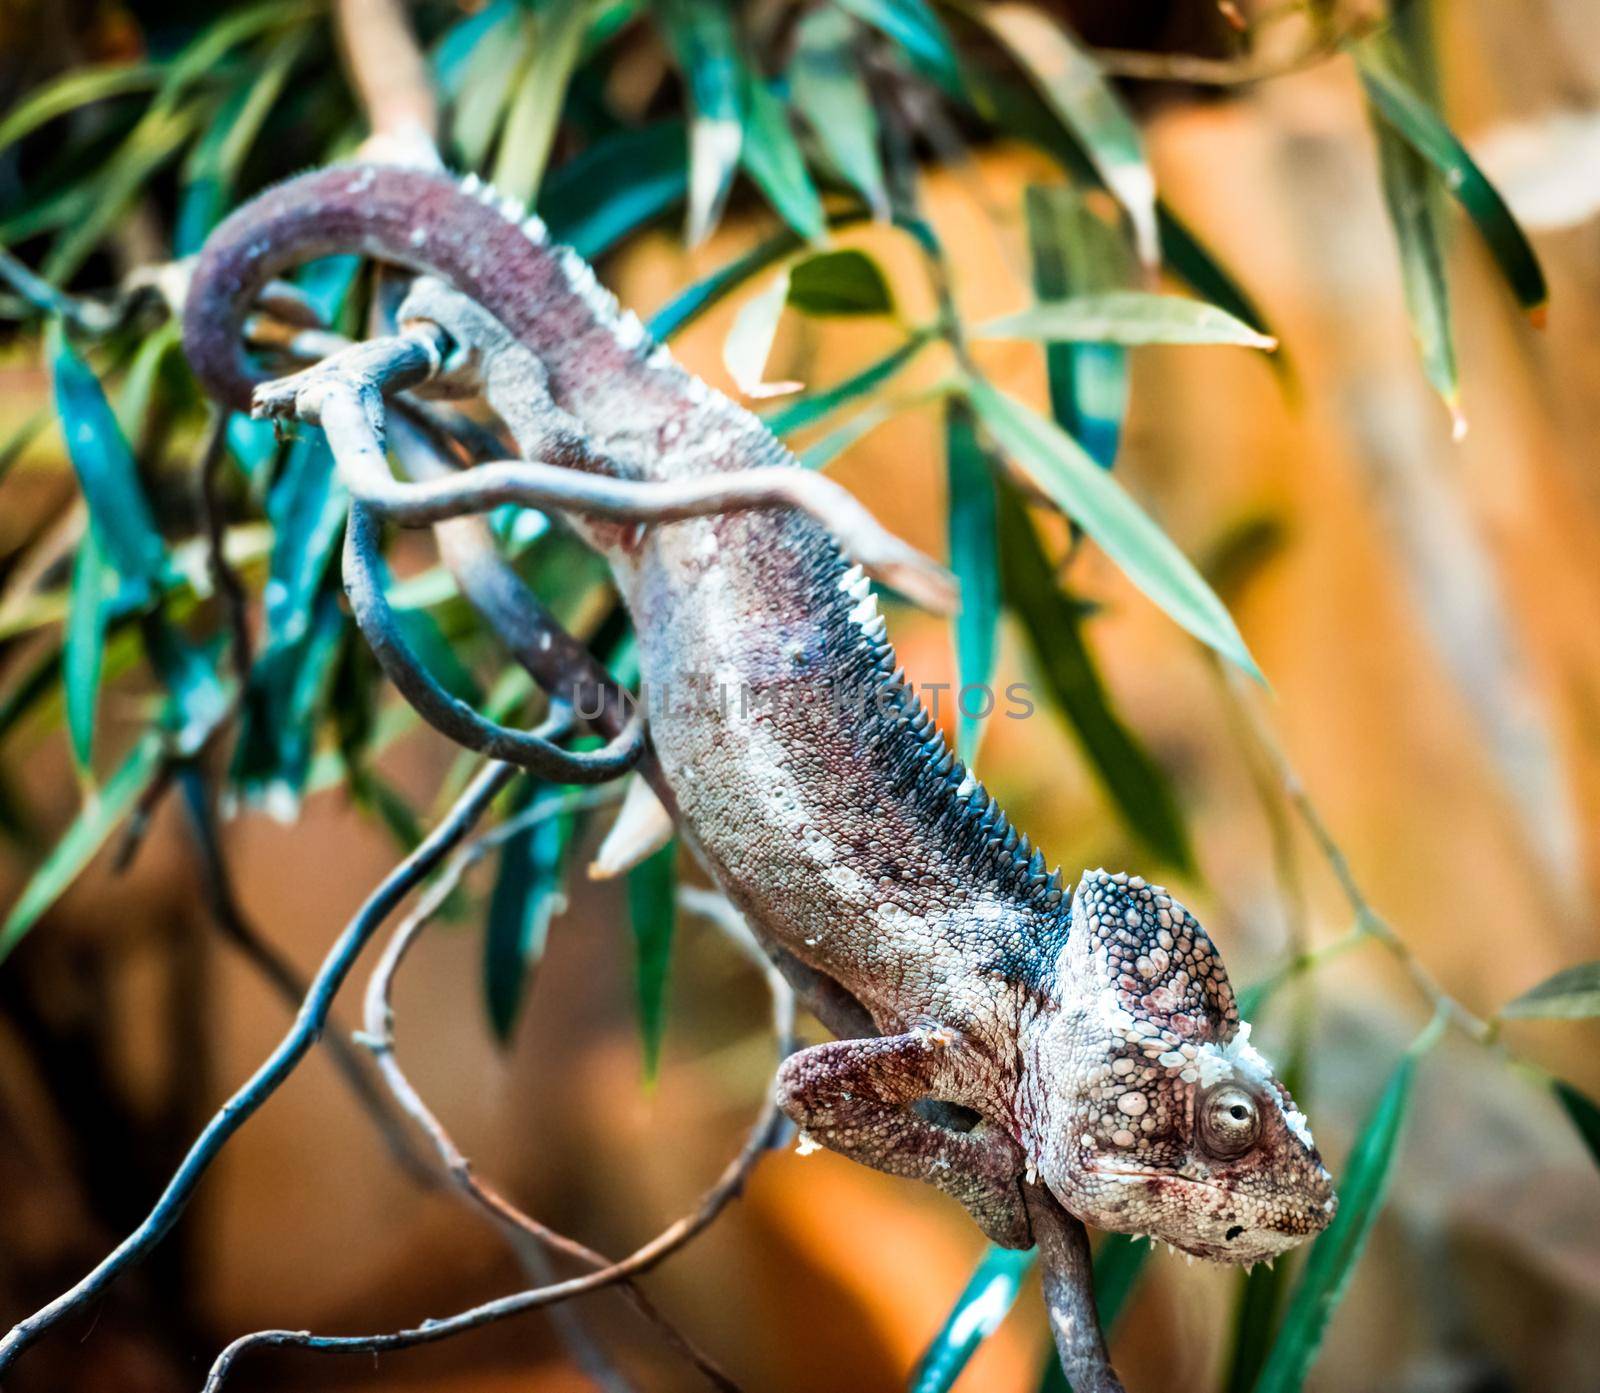 Chameleon stood on a branch